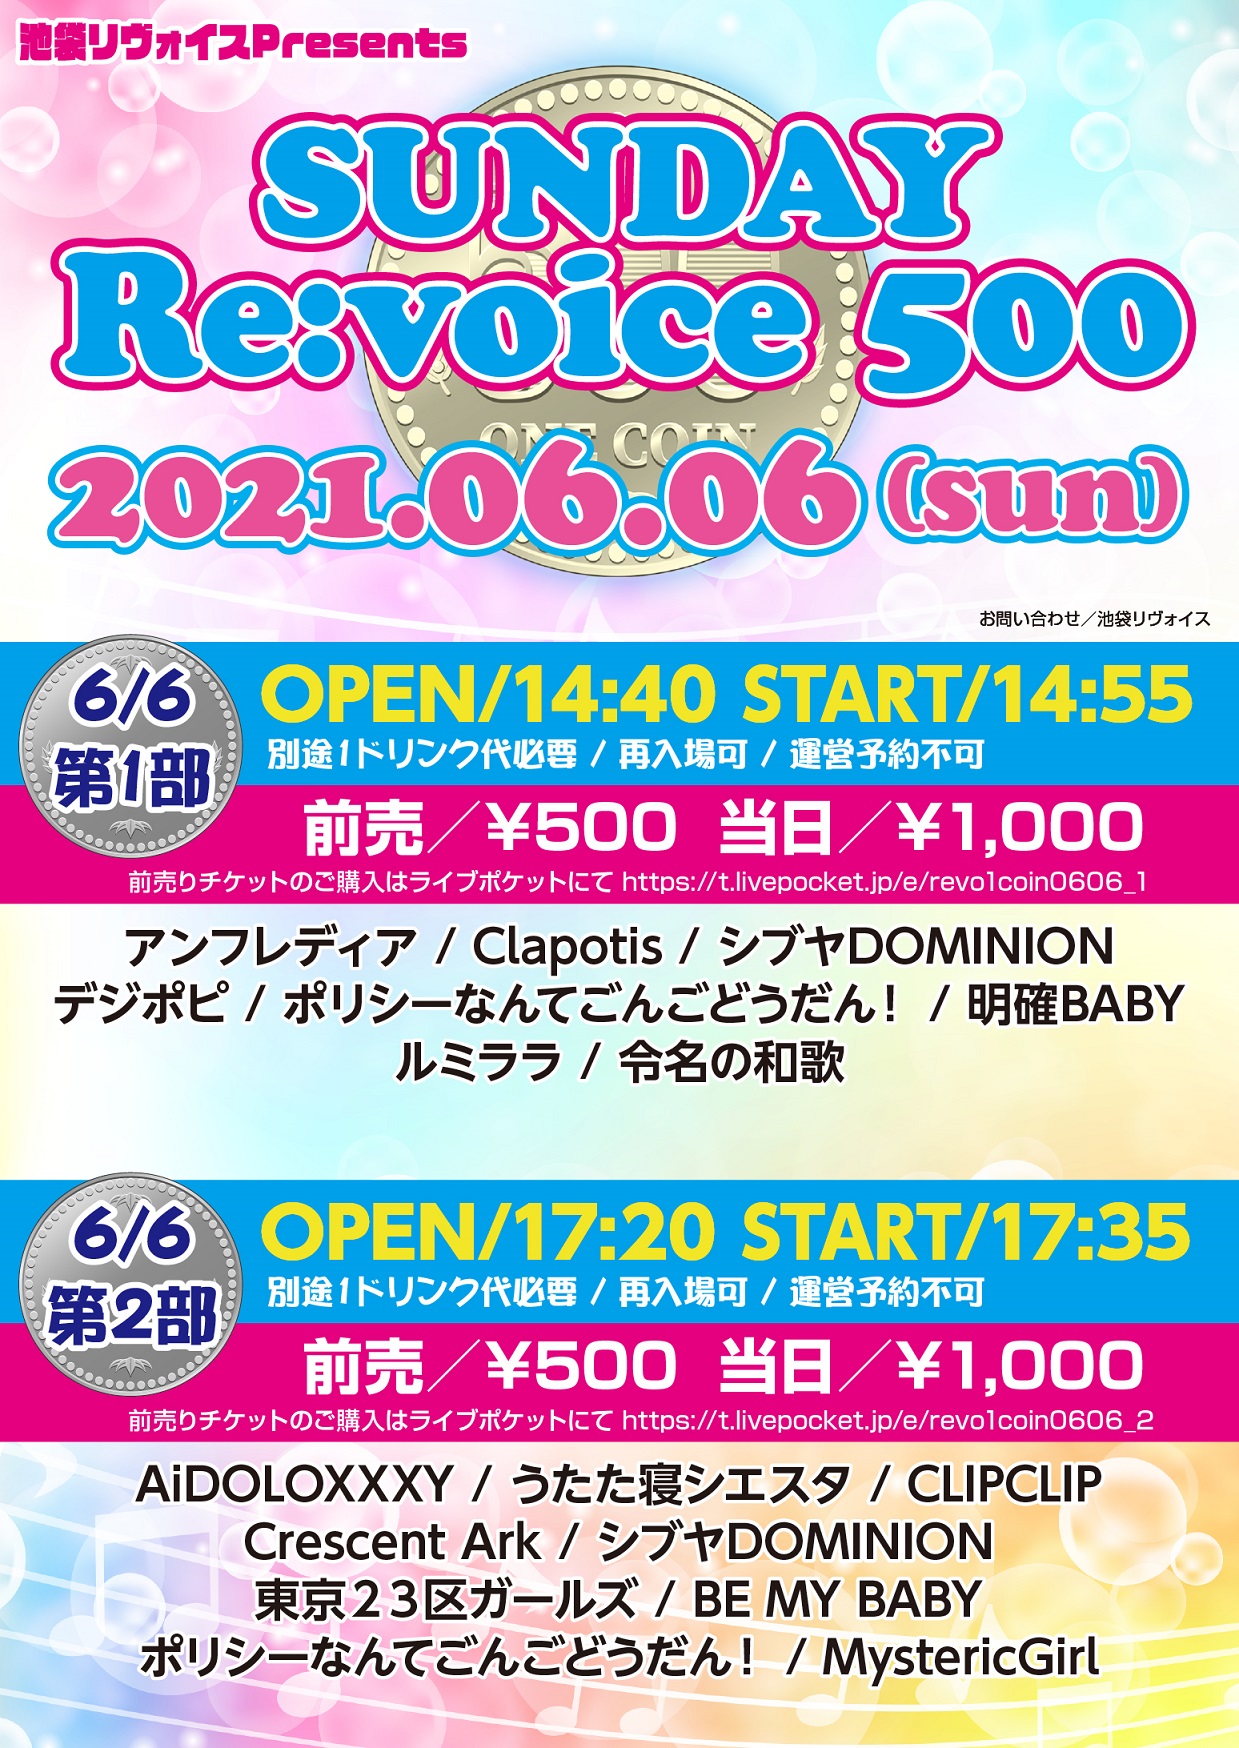 SUNDAY Re:voice 500(06/06)